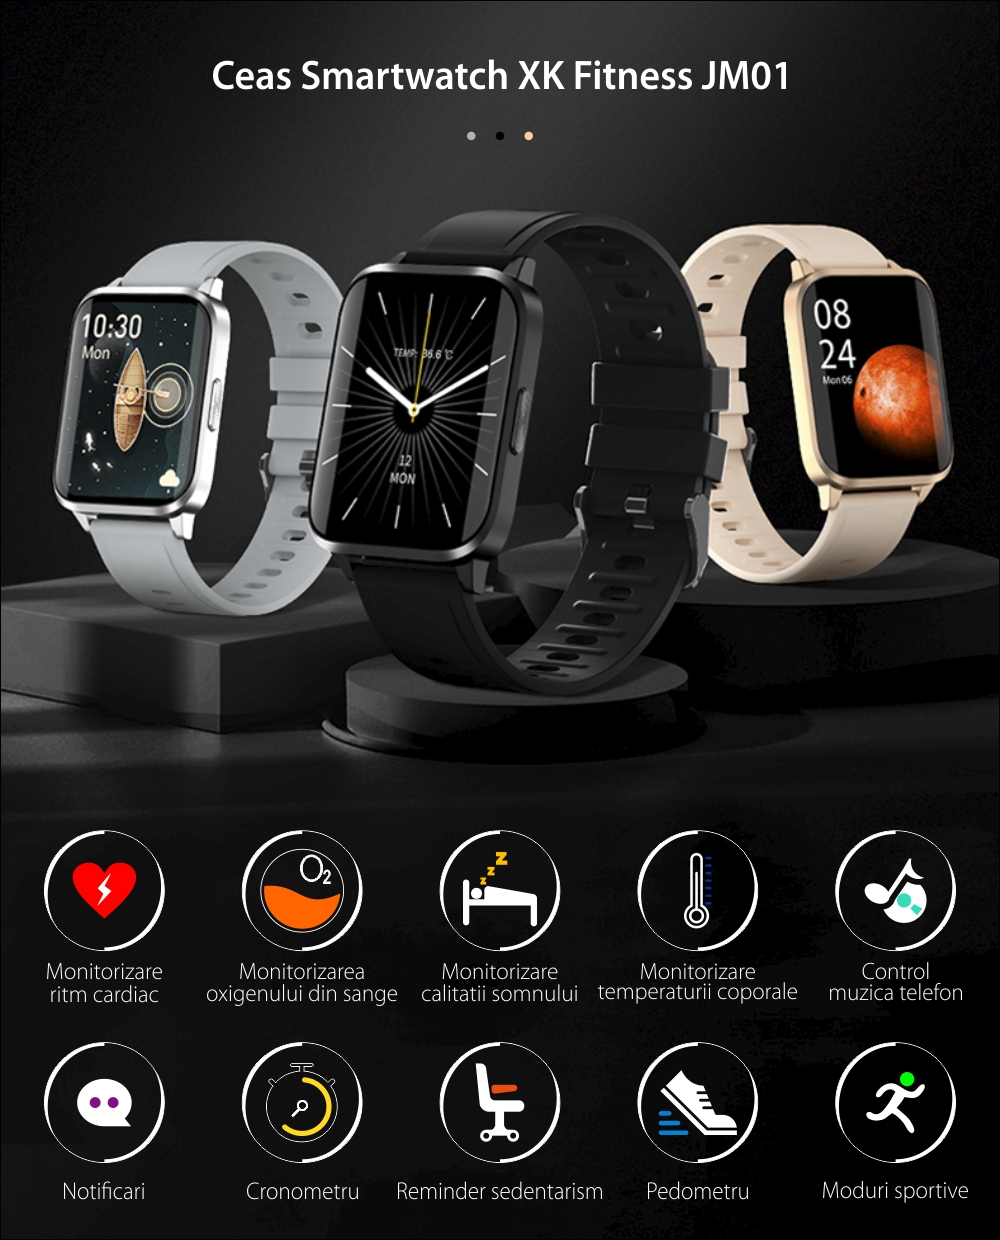 Ceas Smartwatch XK Fitness JM01 cu Functie masurare temperatura corporala, Monitorizare sanatate, Pedometru, Distanta, Calorii, Bratara metalica, Argintiu